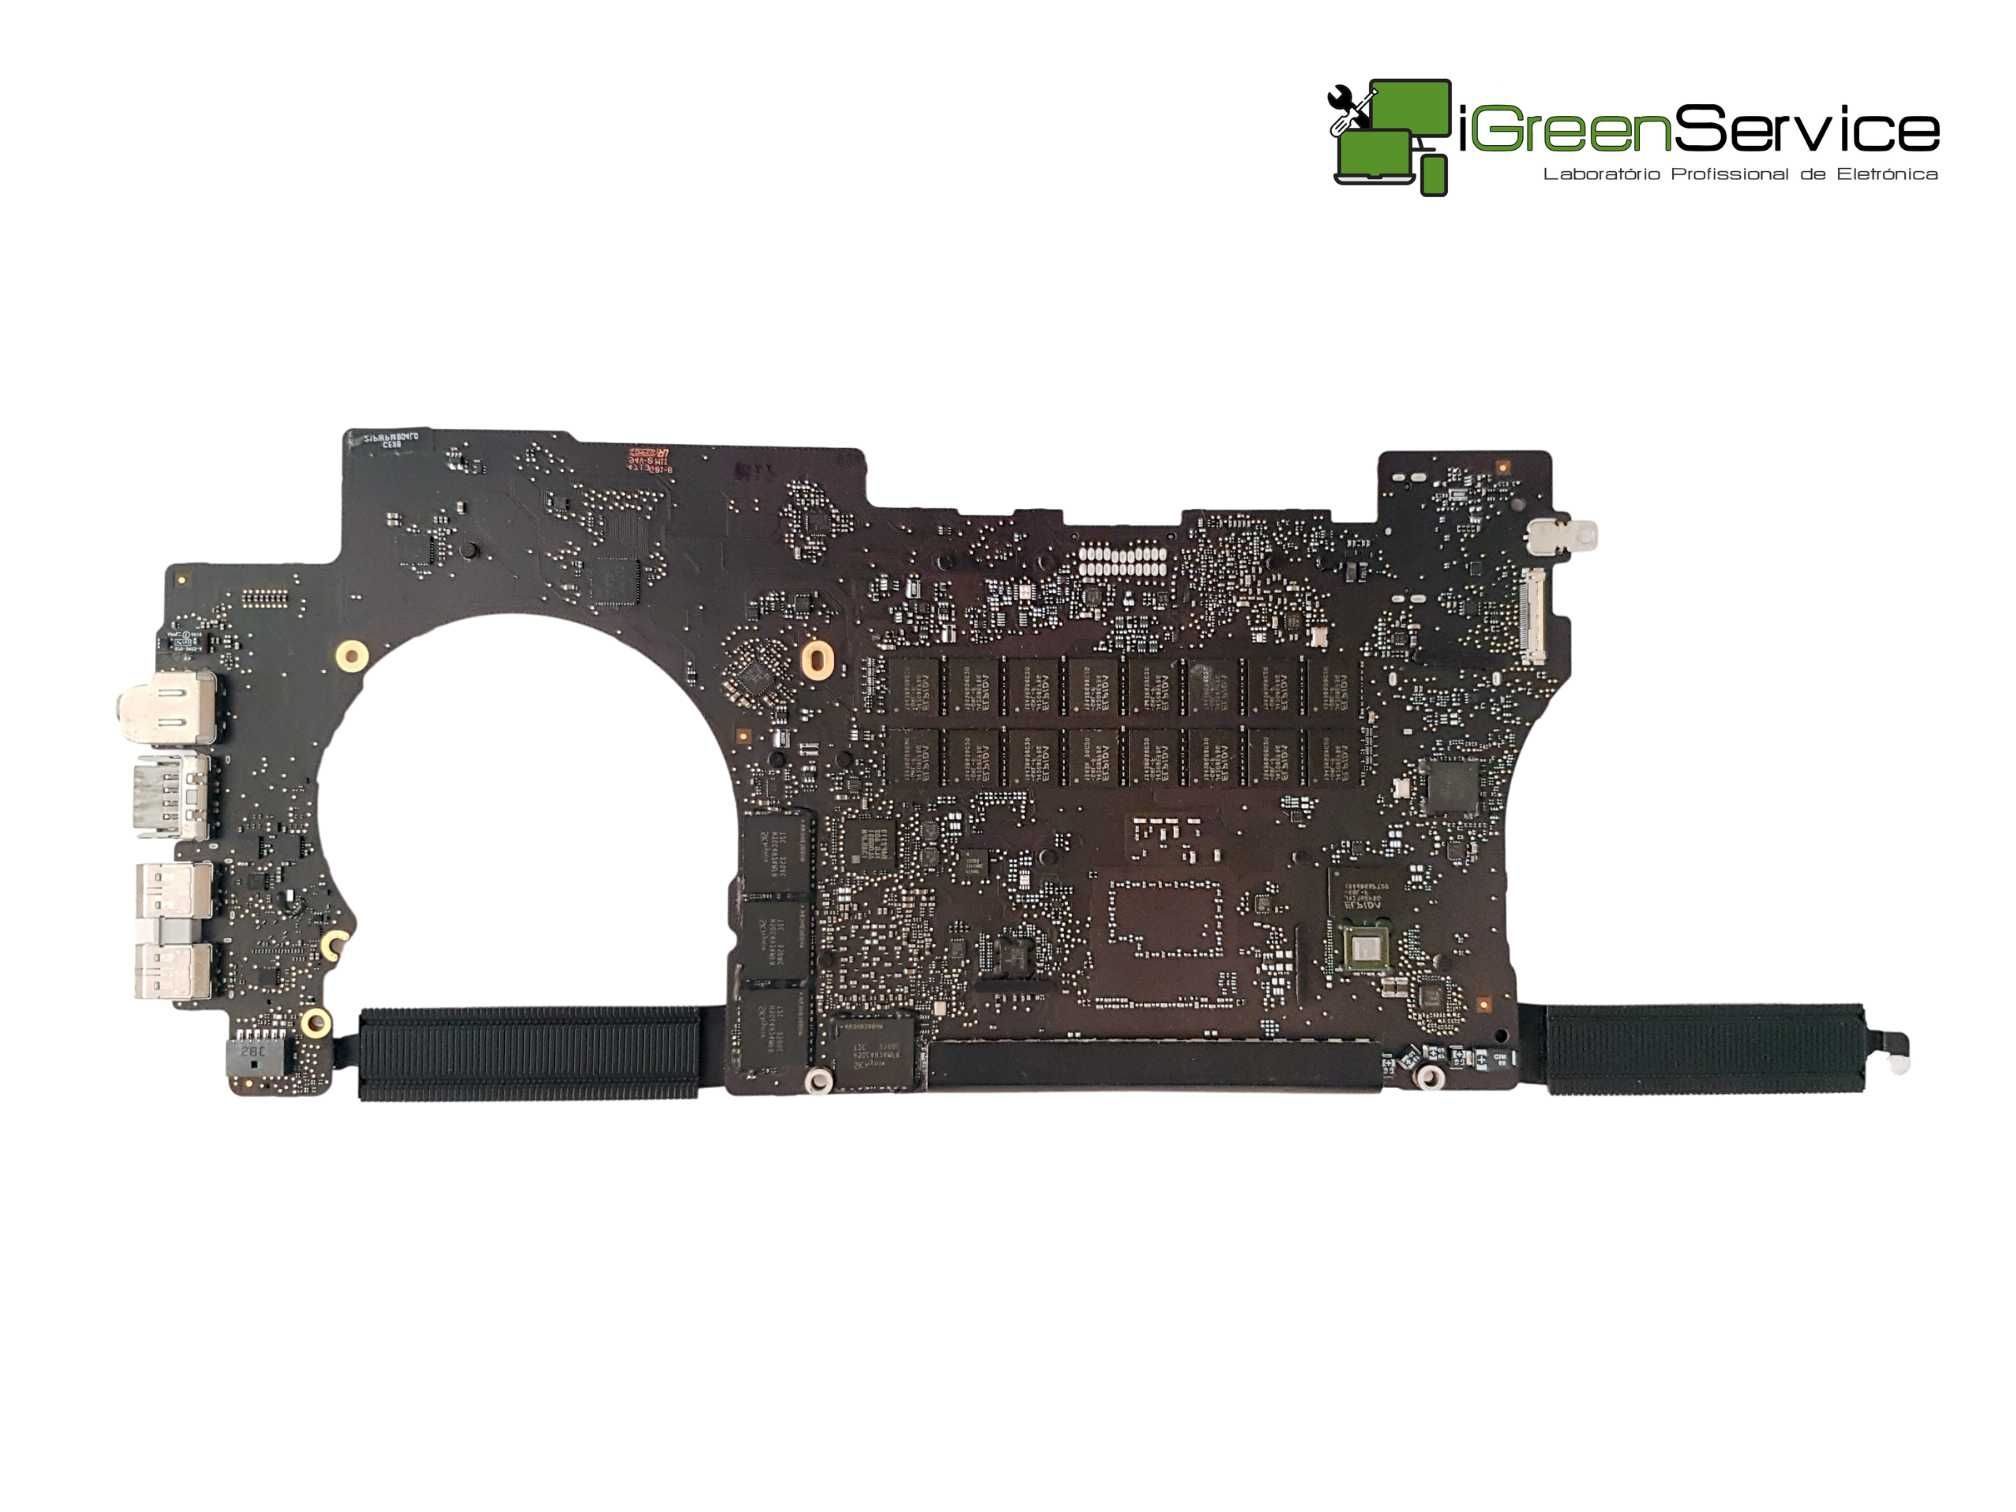 PLACA - Motherboard, MacBook Pro A1398 - Core I7 - 16gb Ram - Ano 2015